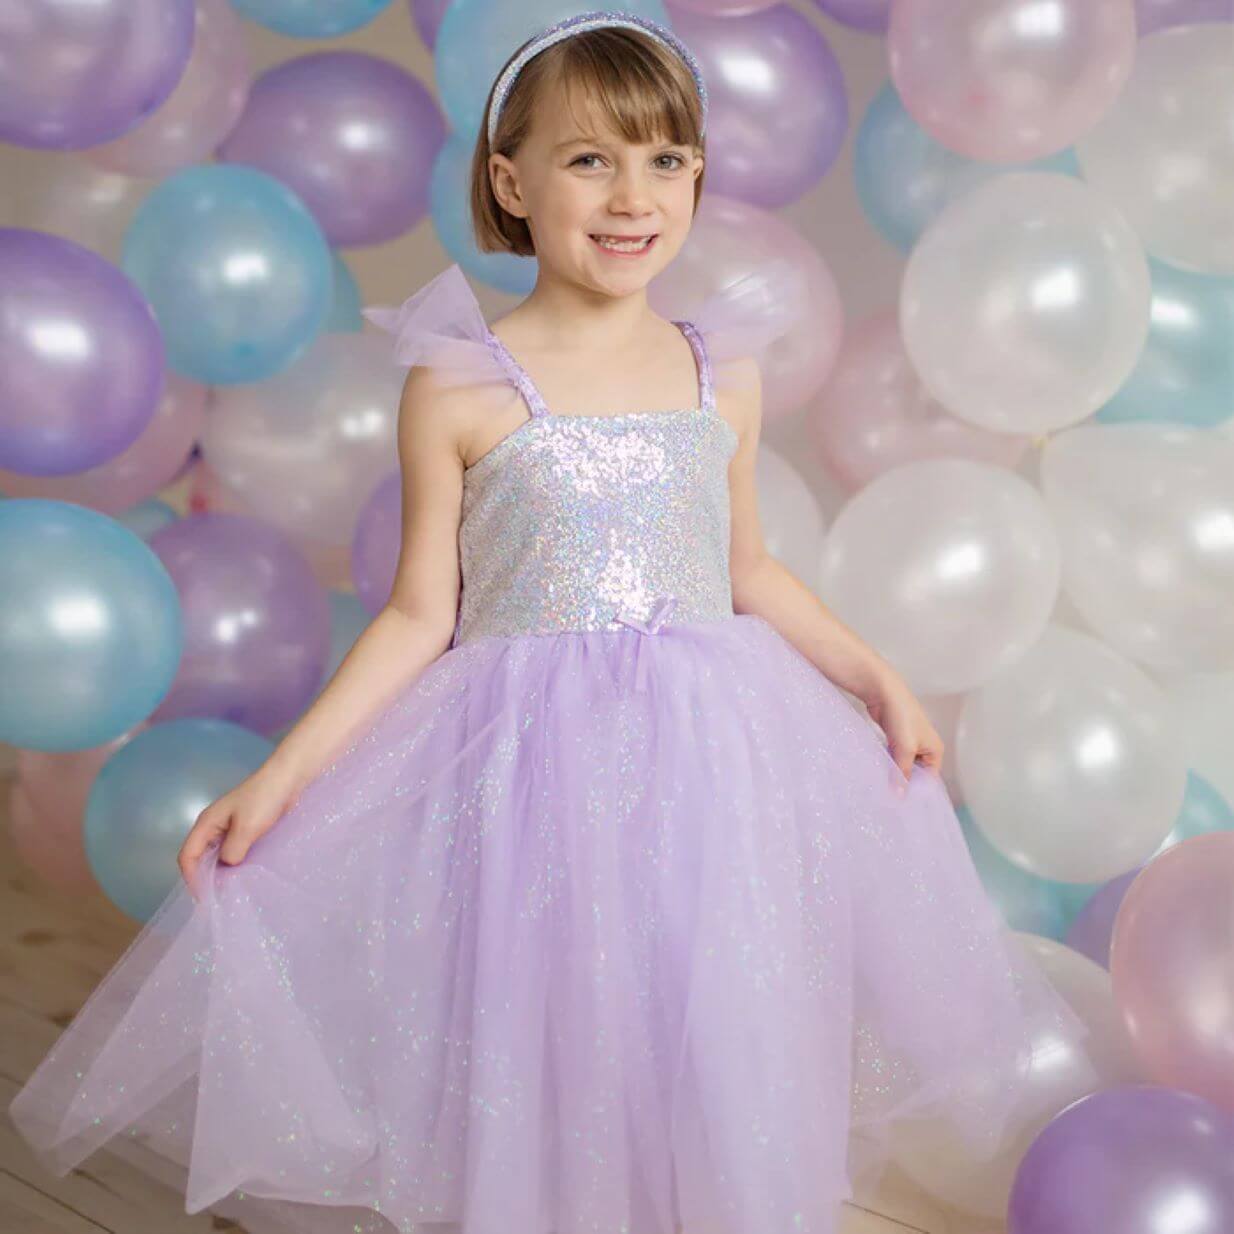 Sequins Fairy Princess Dress - Lilac